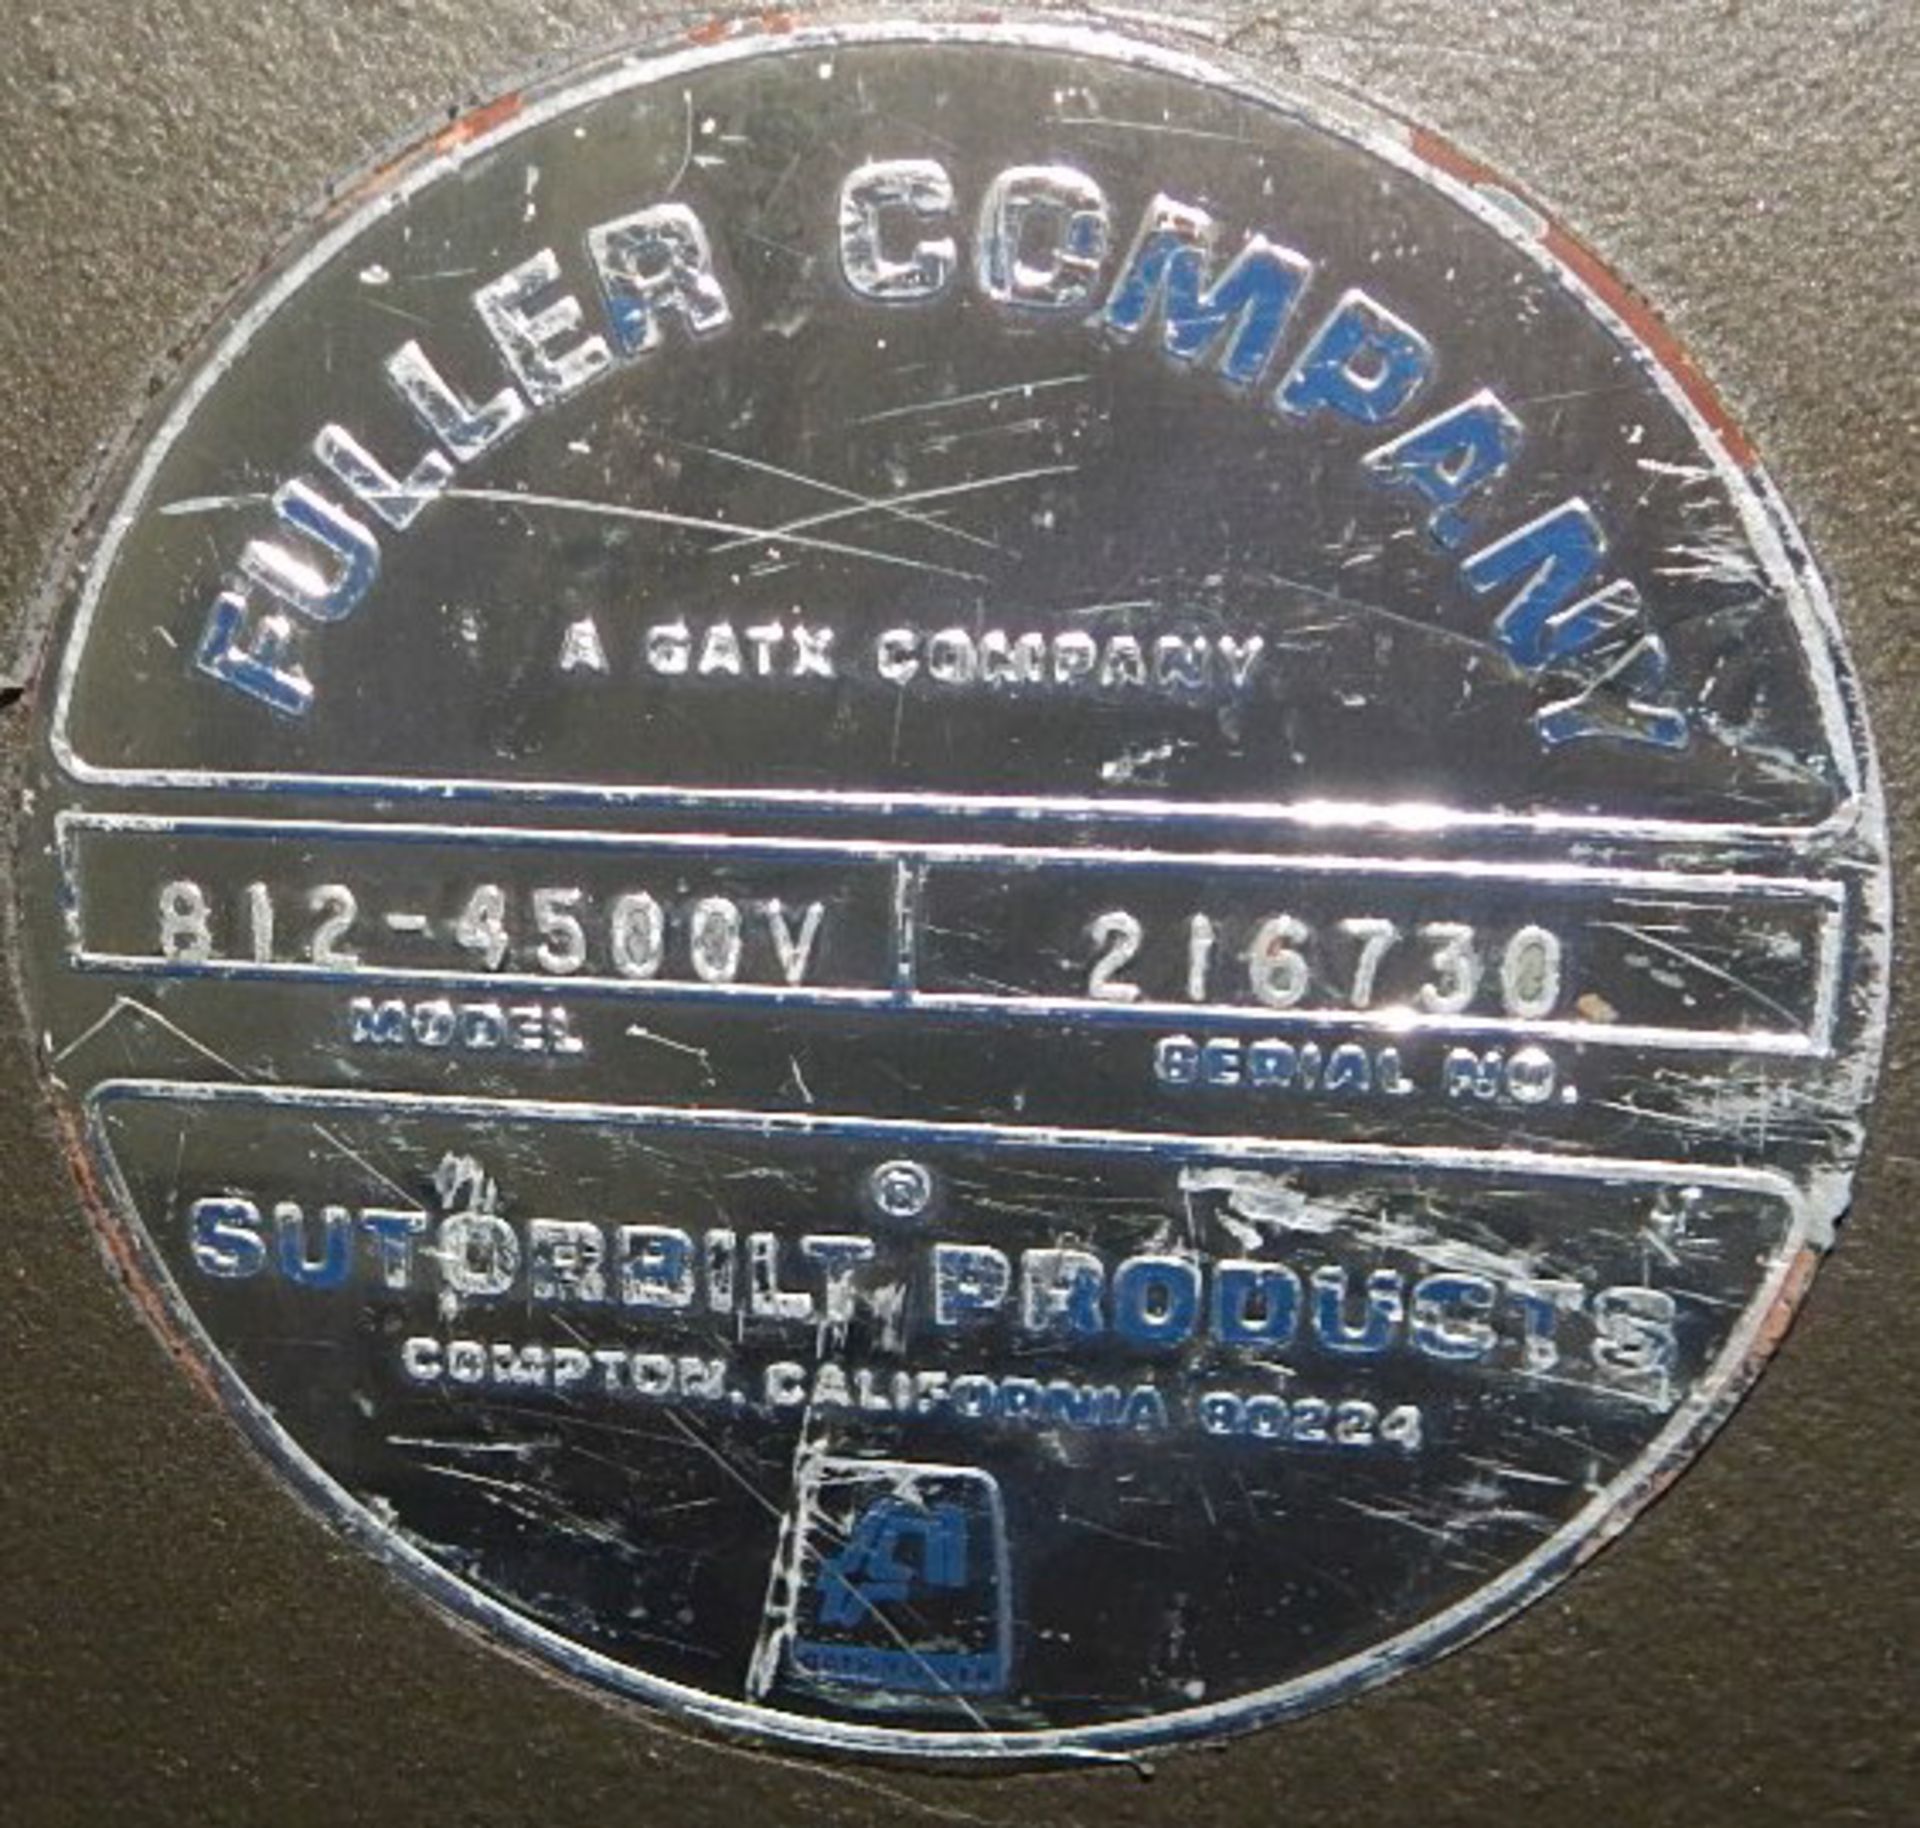 SUTORBILT GARDNER-DENVER 812-4500V BLOWER, S/N: 216730 (CI) [SKU 1283] (LOCATED IN DIDSBURY, AB) [ - Image 4 of 4